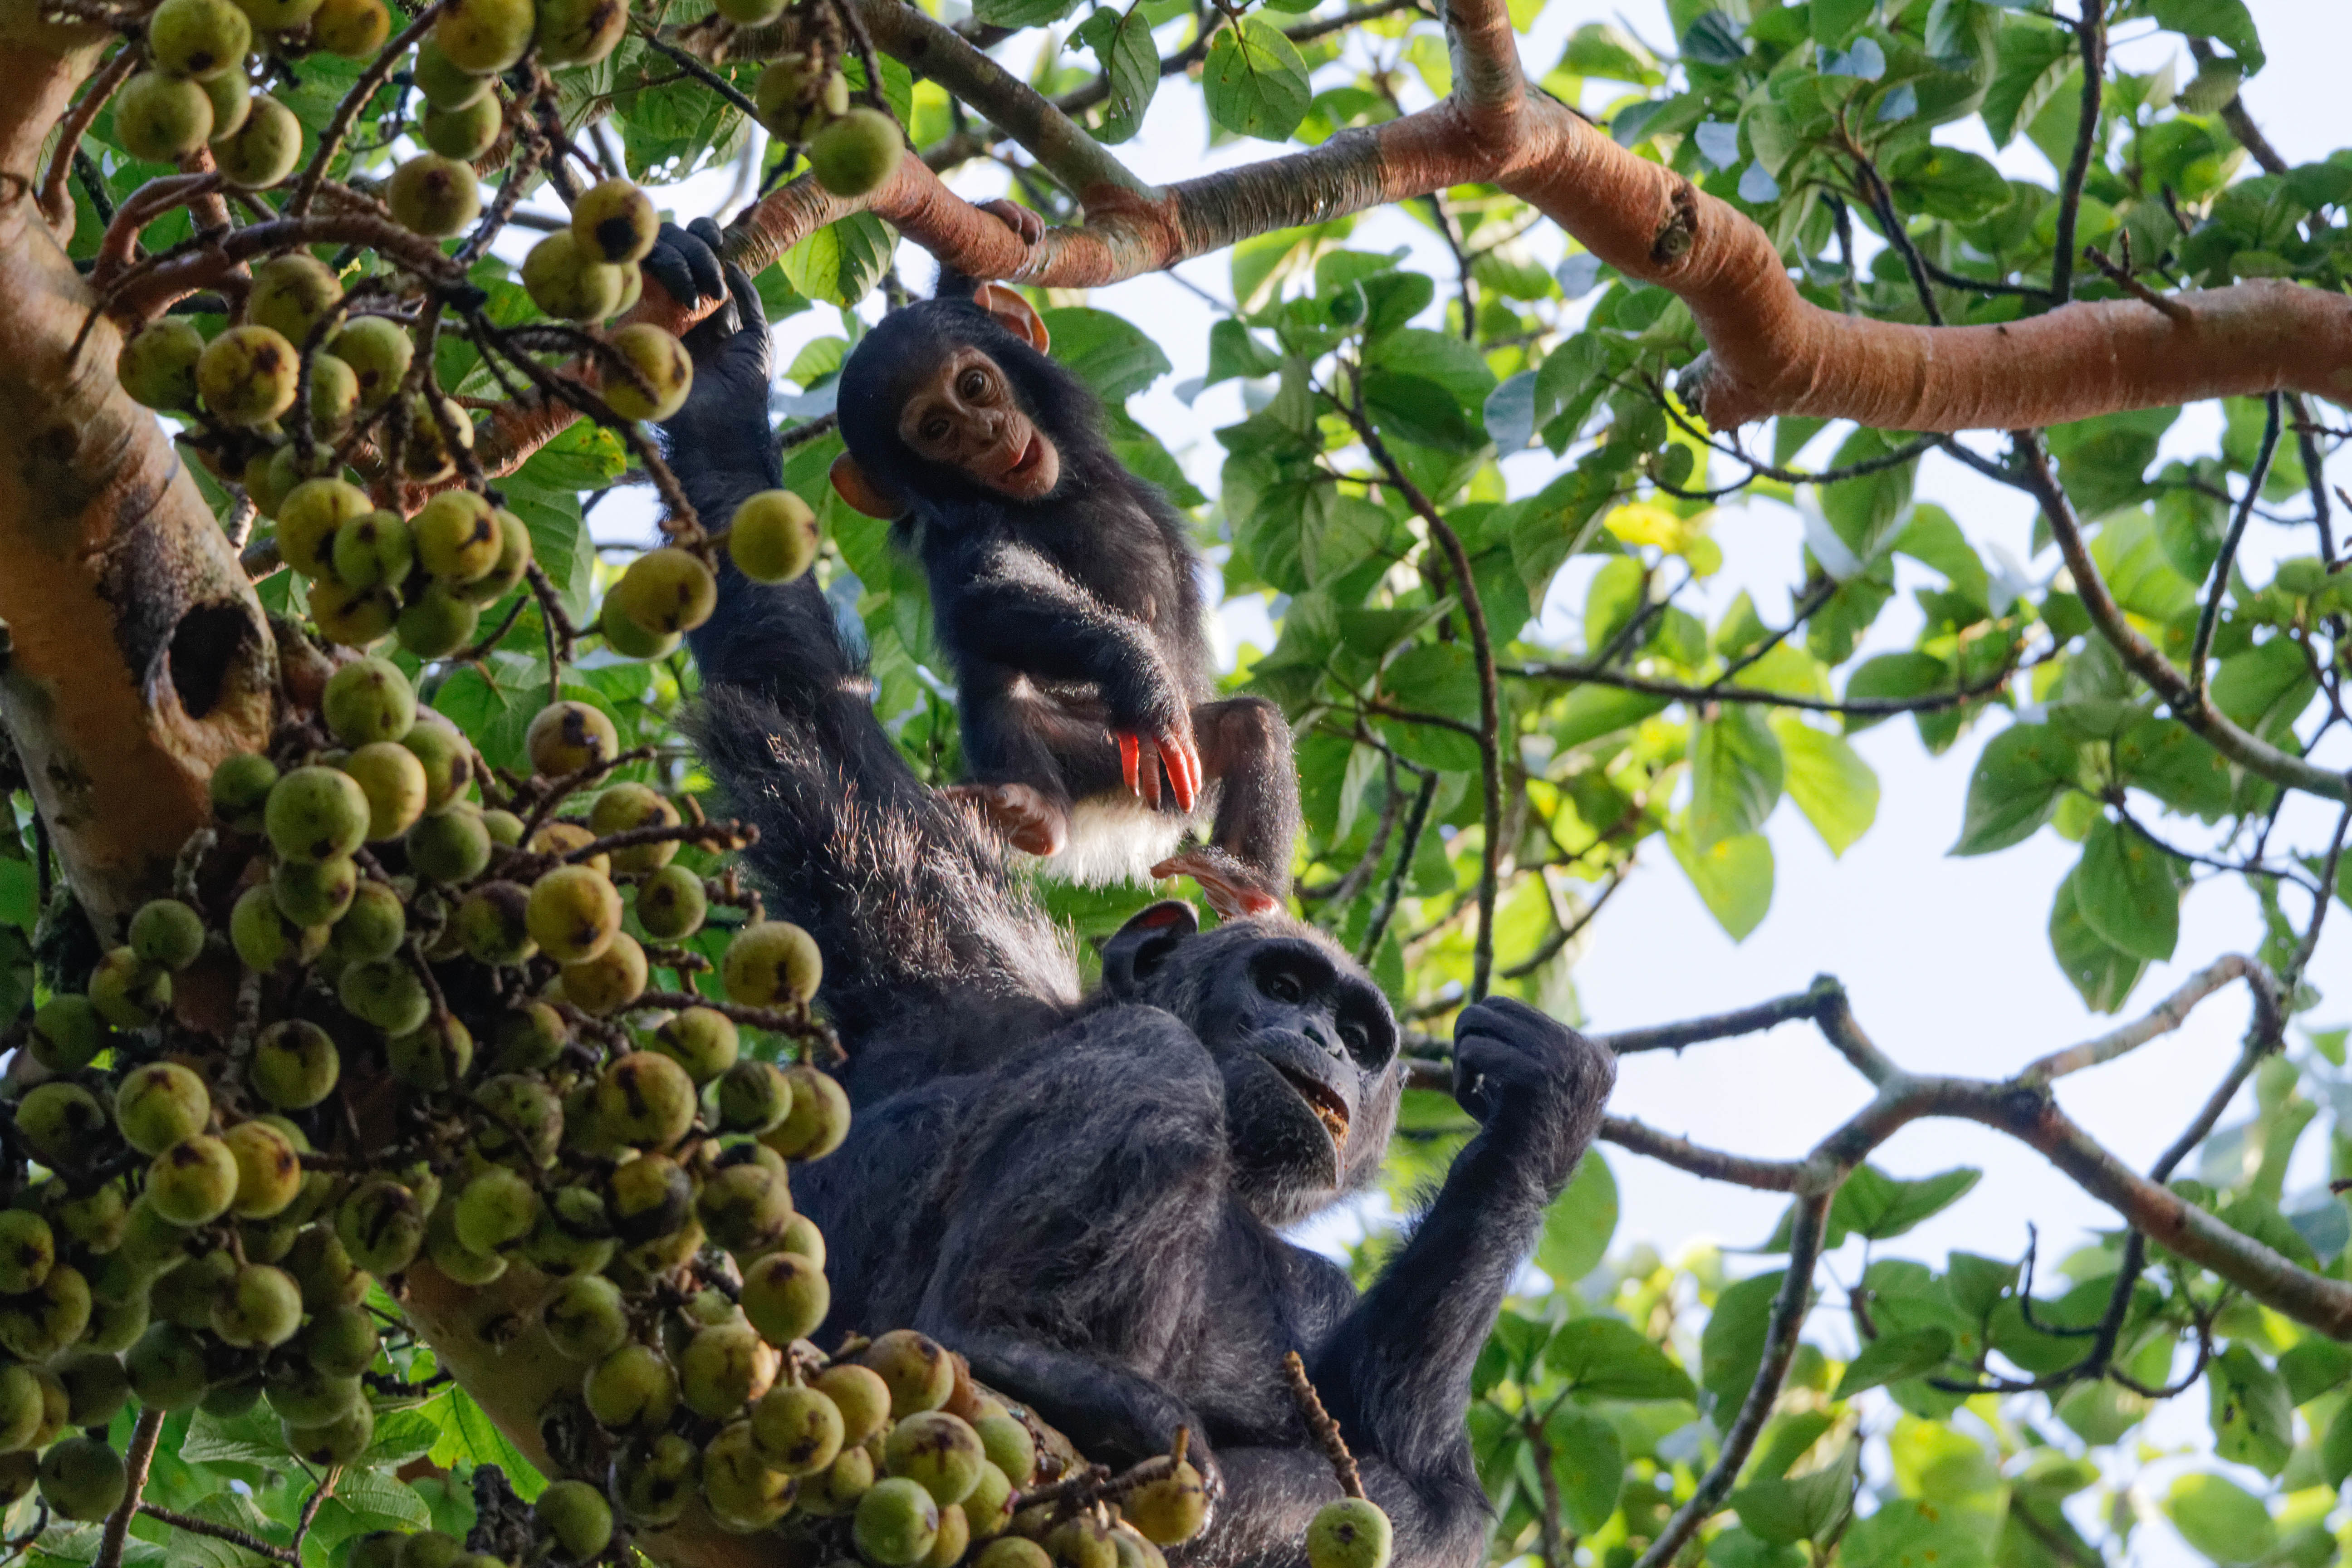 baby chimpanzees on a tree